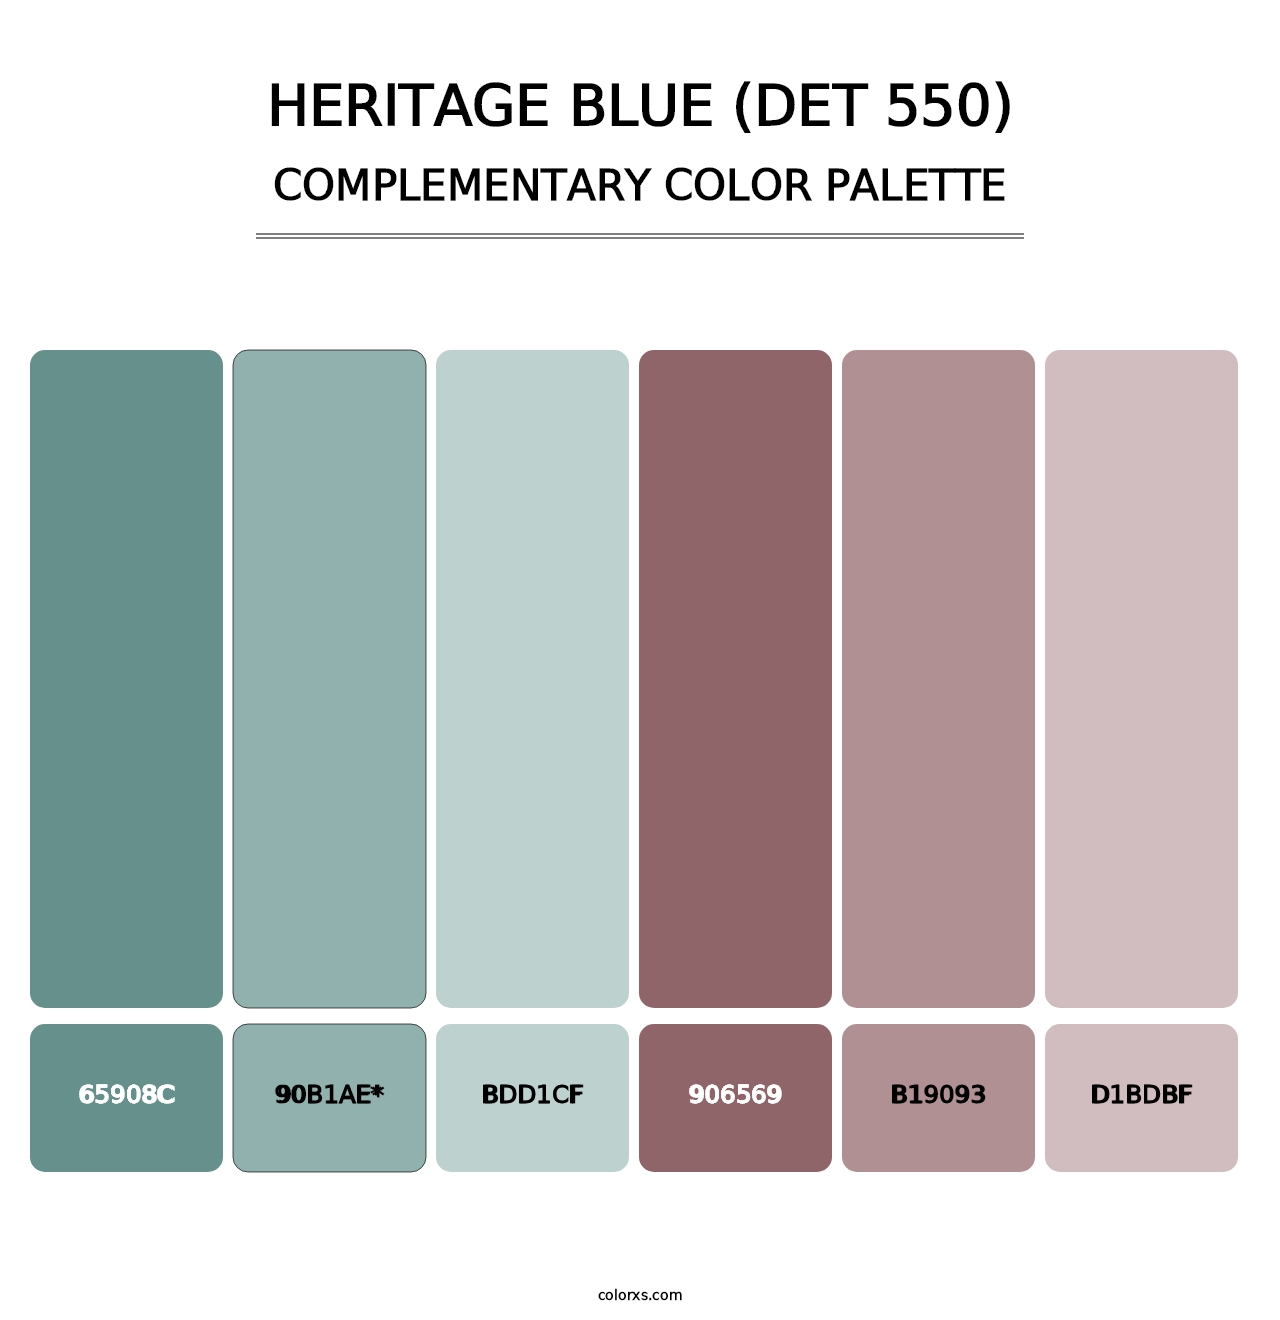 Heritage Blue (DET 550) - Complementary Color Palette